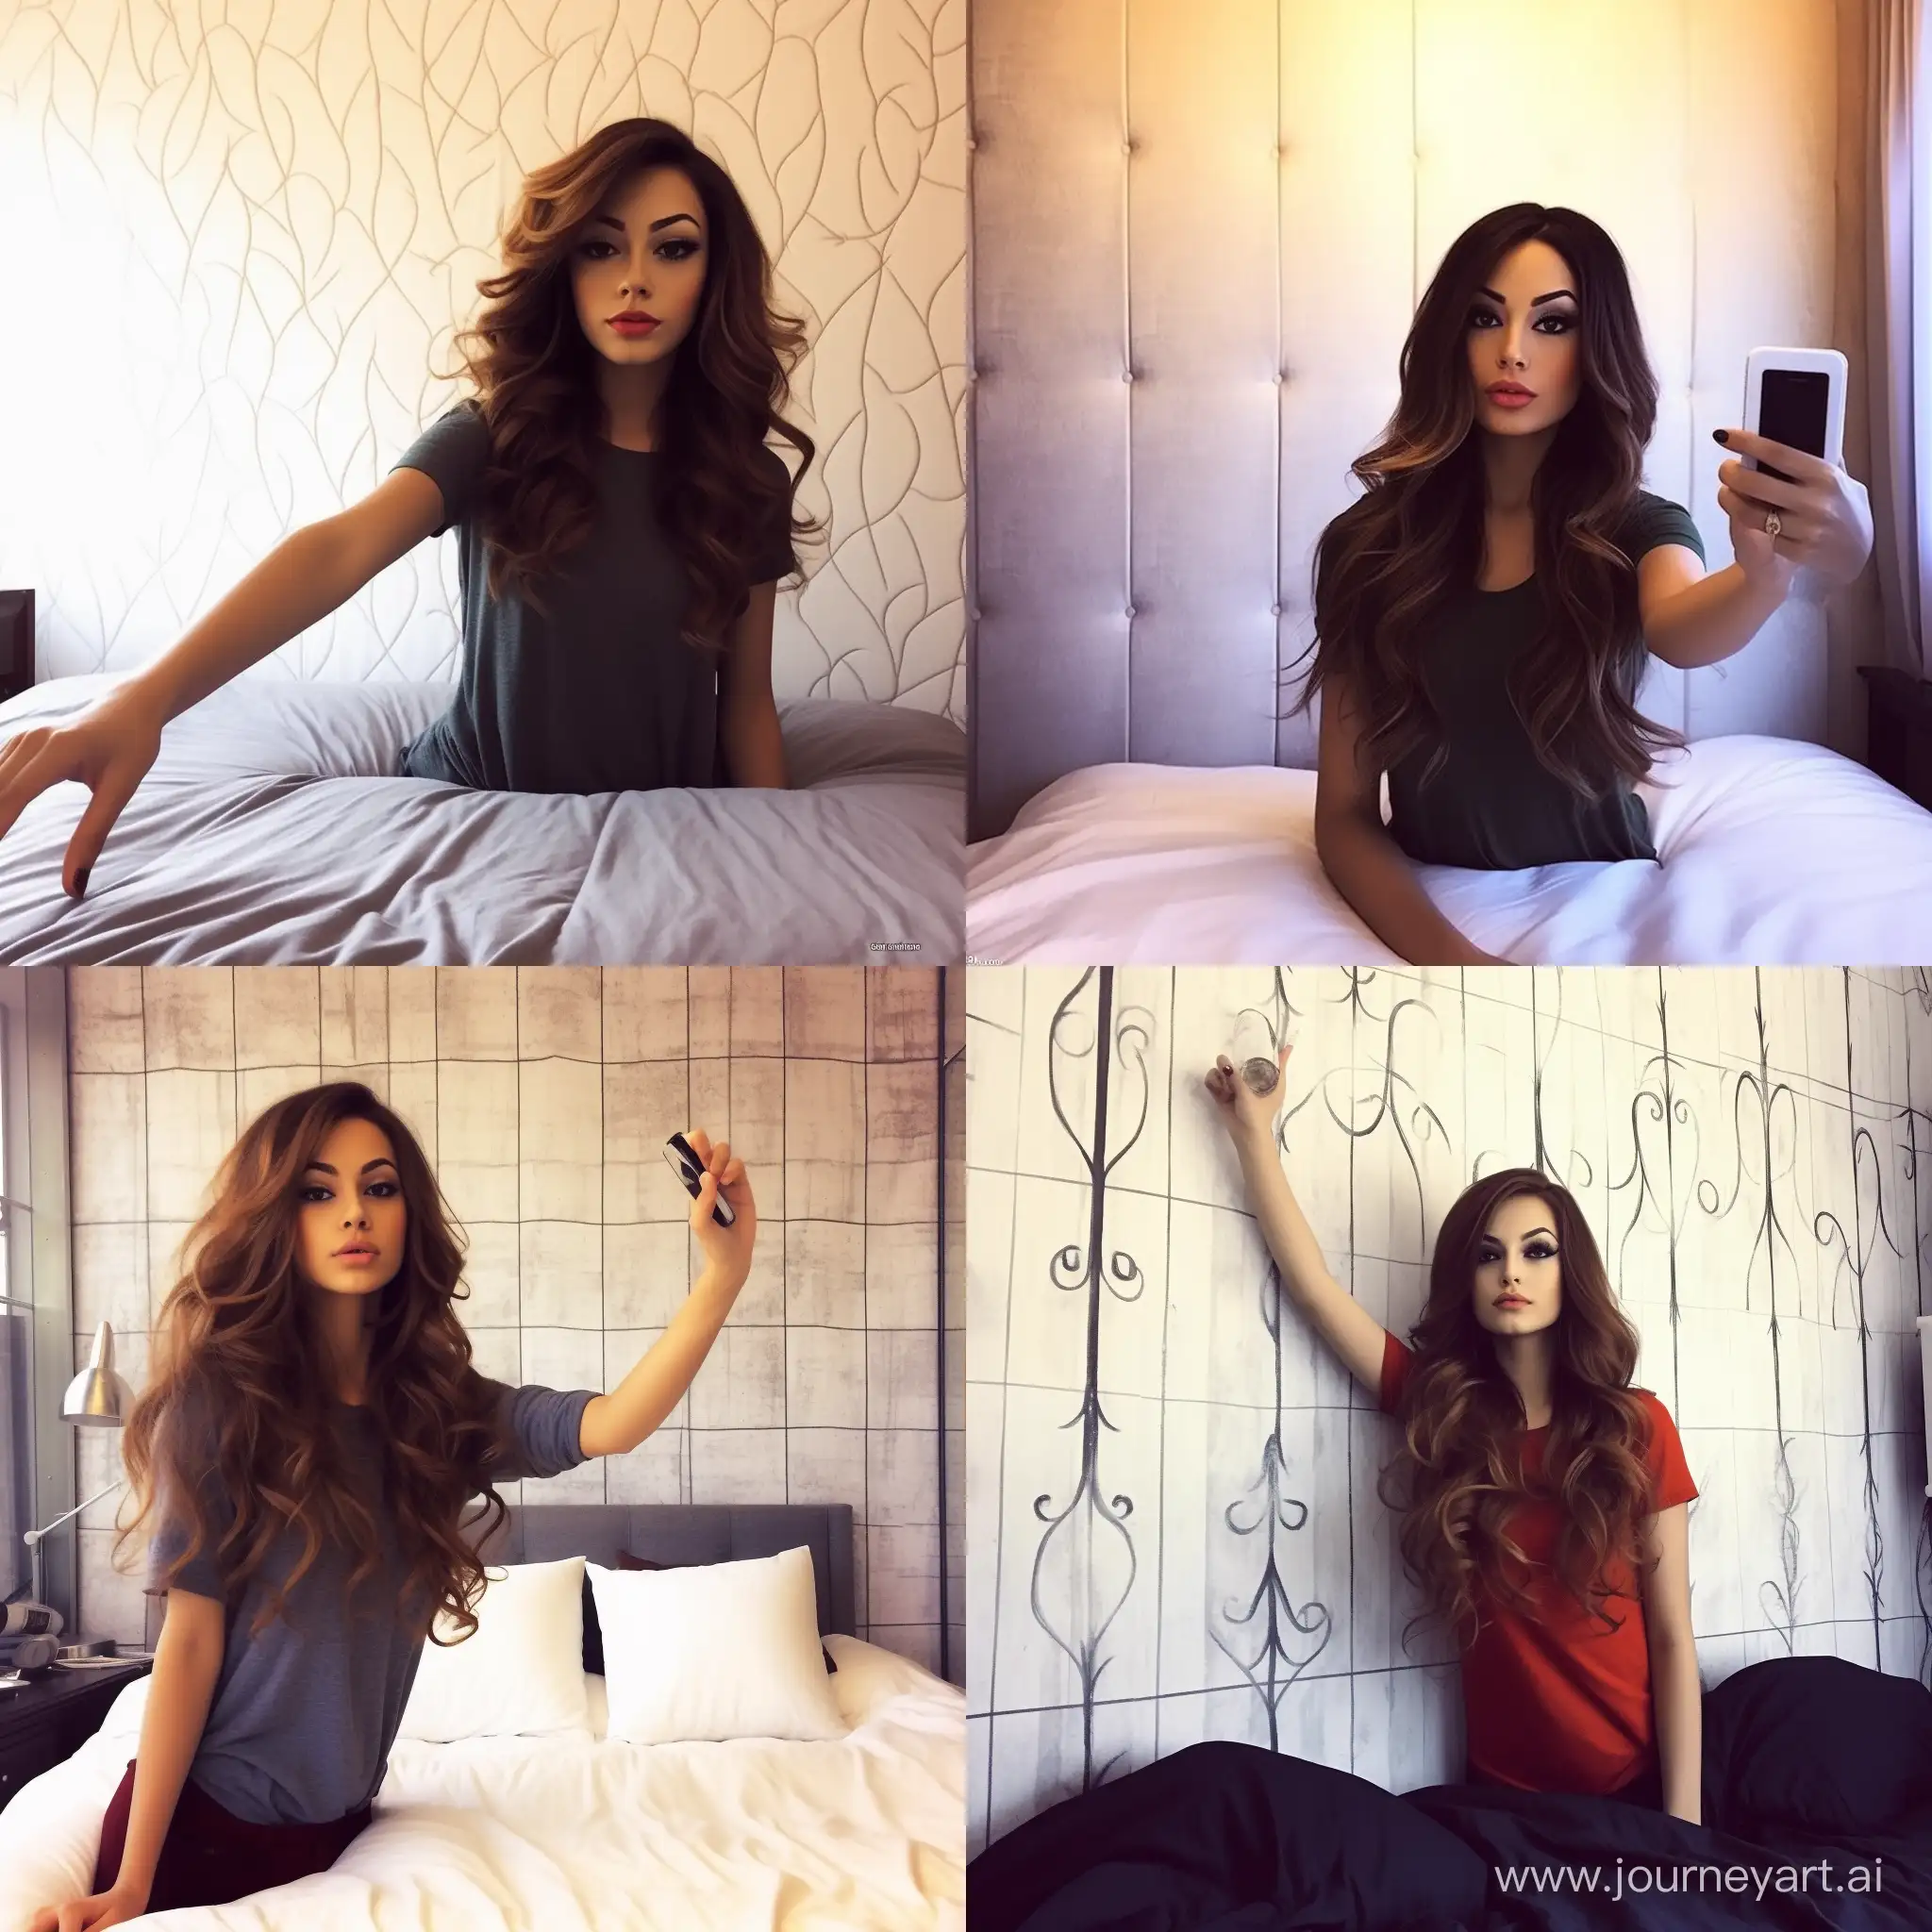 Stylish-Bedroom-Selfie-Captivating-Girl-Poses-Amid-Cozy-Surroundings